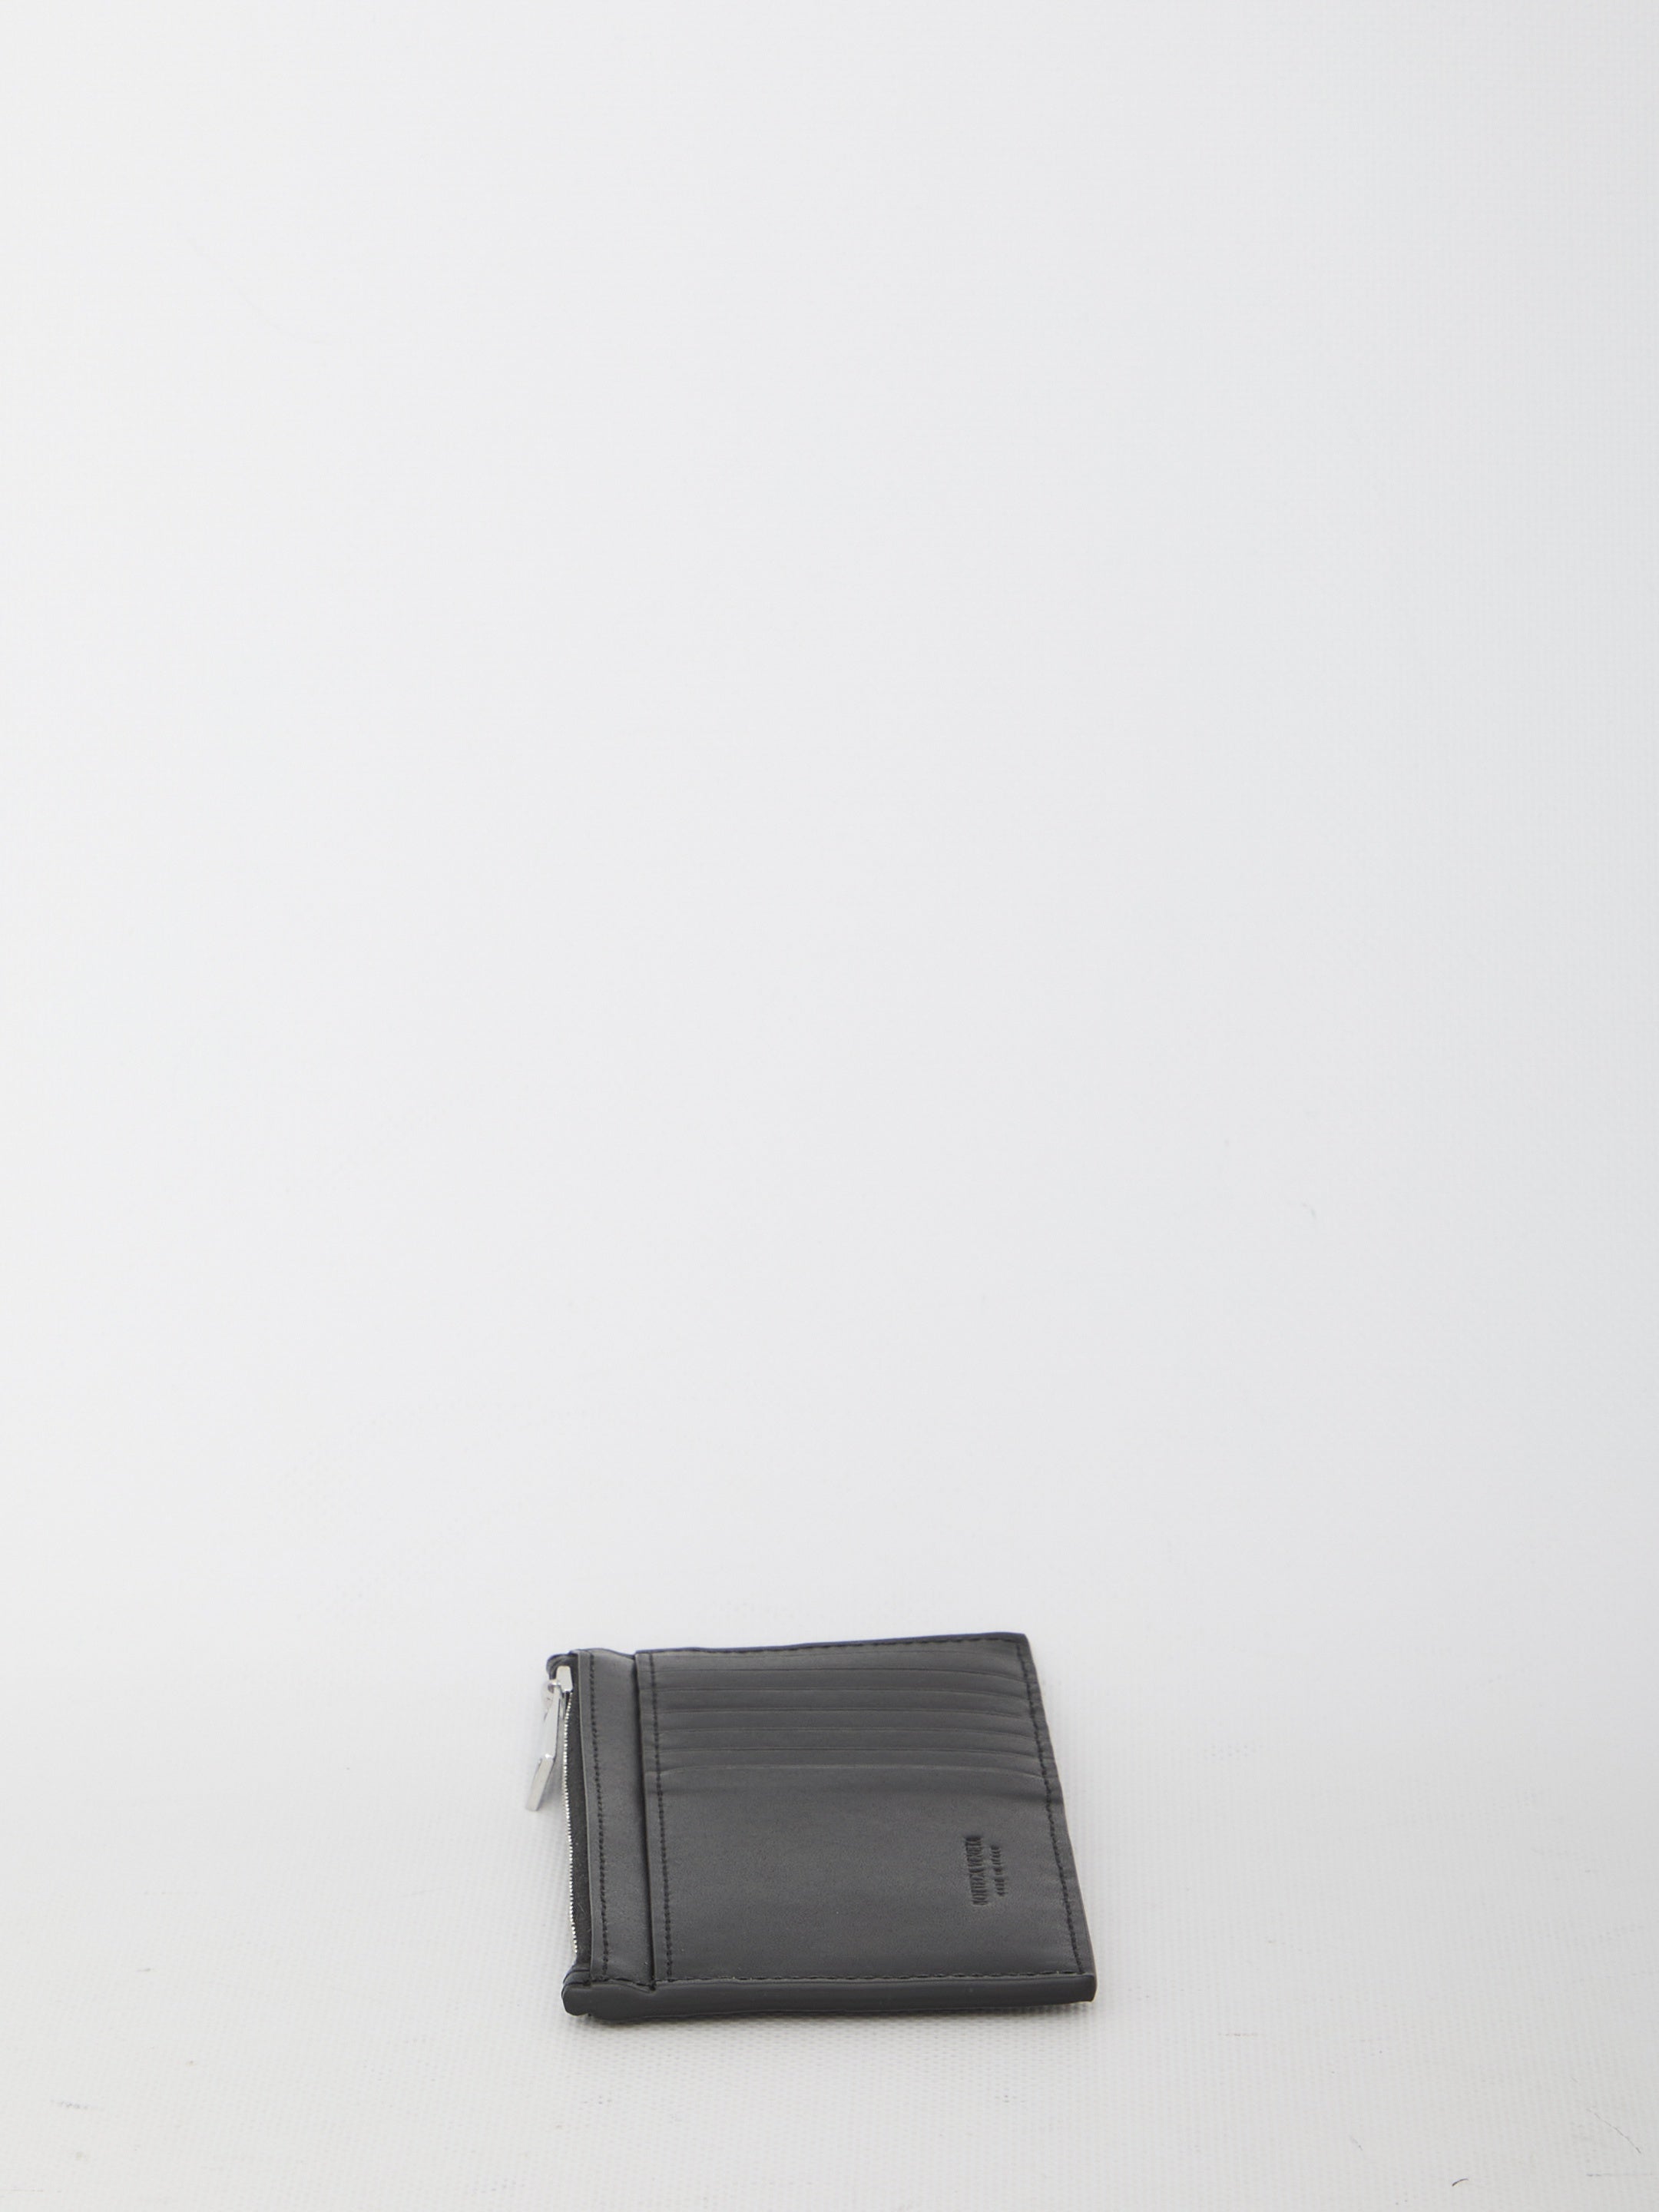 BOTTEGA-VENETA-OUTLET-SALE-Intrecciato-cardholder-Taschen-QT-BLACK-ARCHIVE-COLLECTION-3.jpg